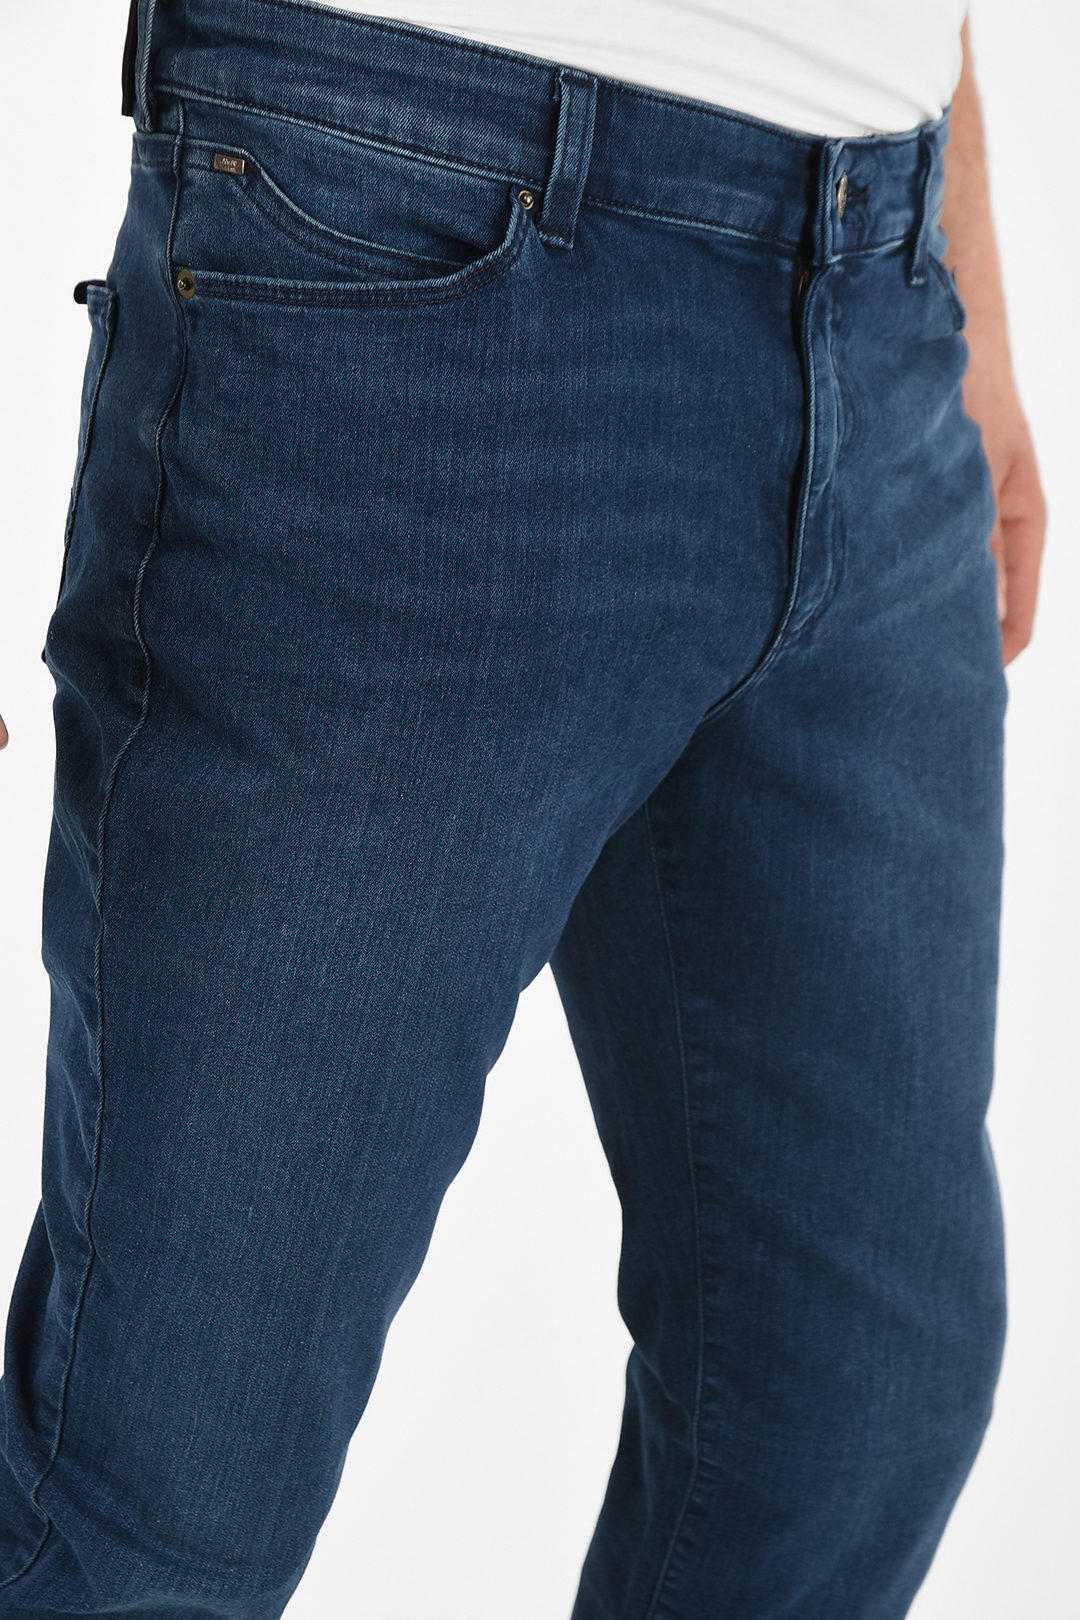 Armani ARMANI JEANS Slim Fit J18 DAHLIA Jeans women - Glamood Outlet